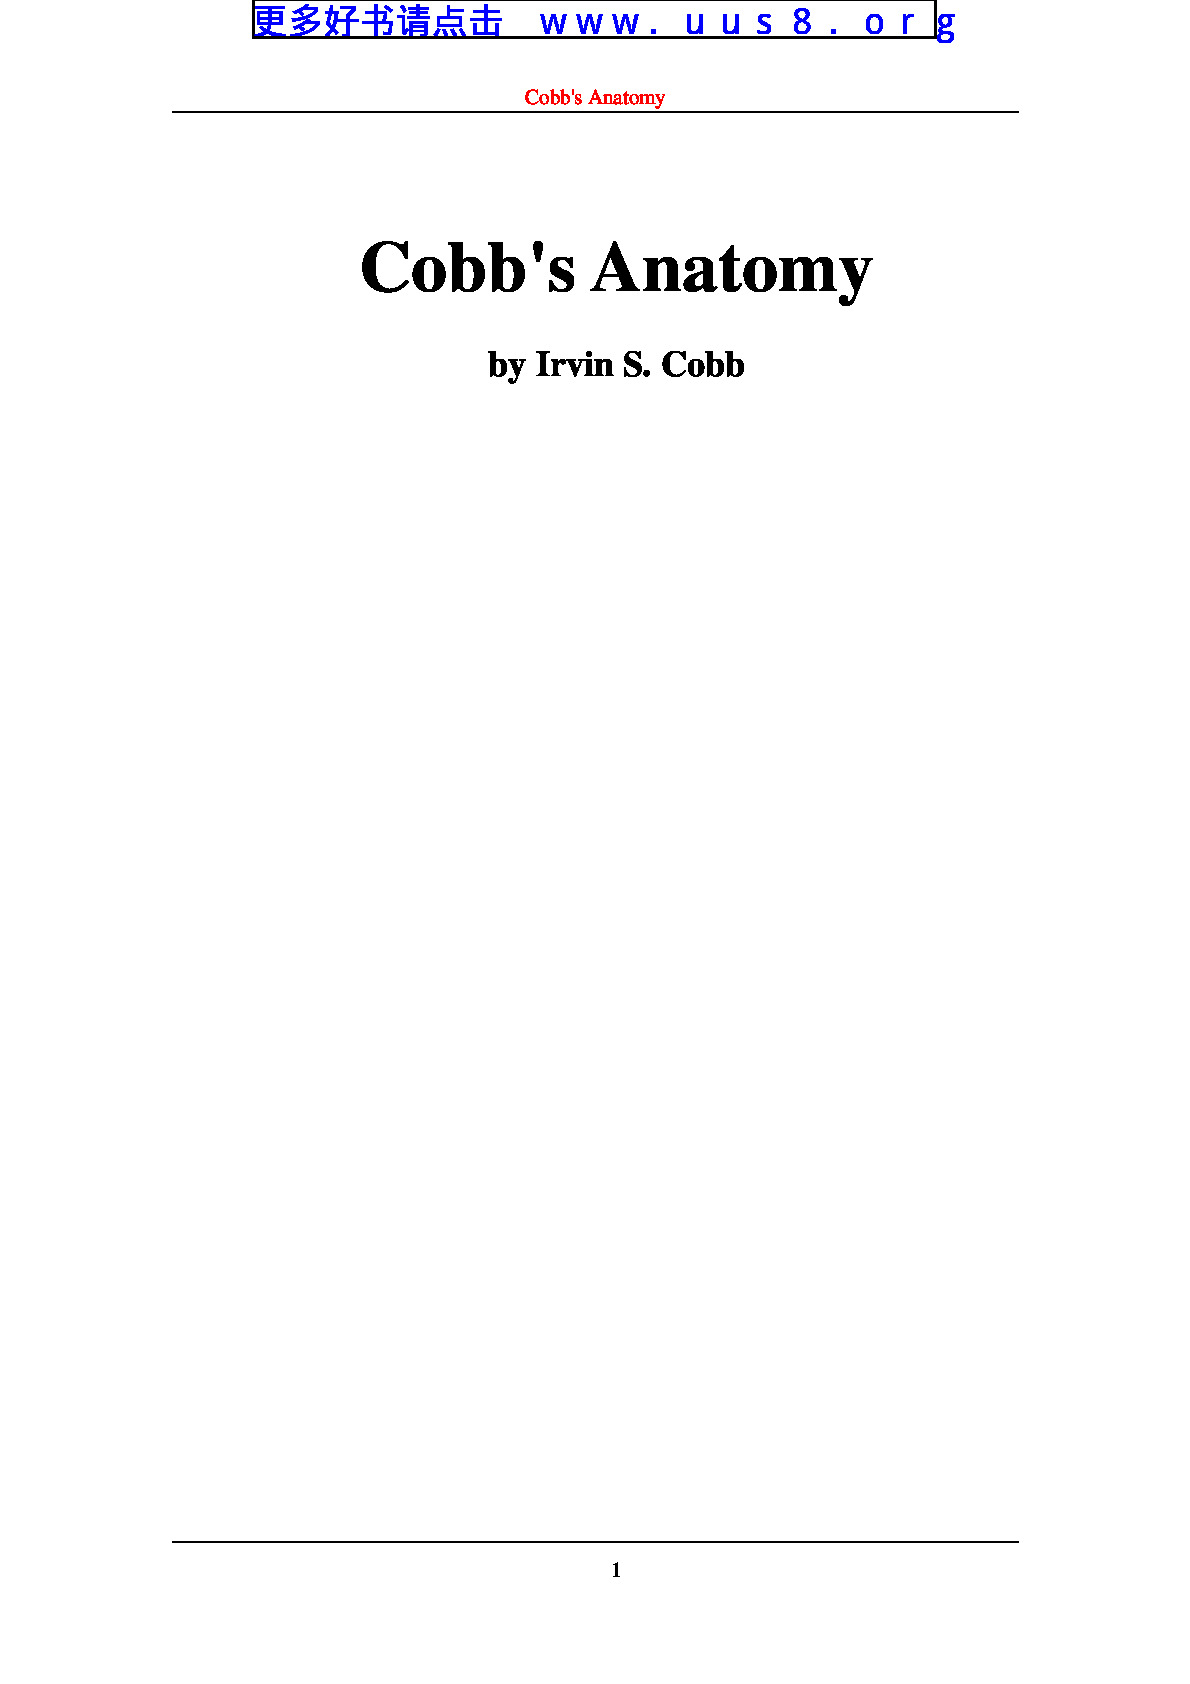 Cobb’s_Anatomy(科伯的解剖学)